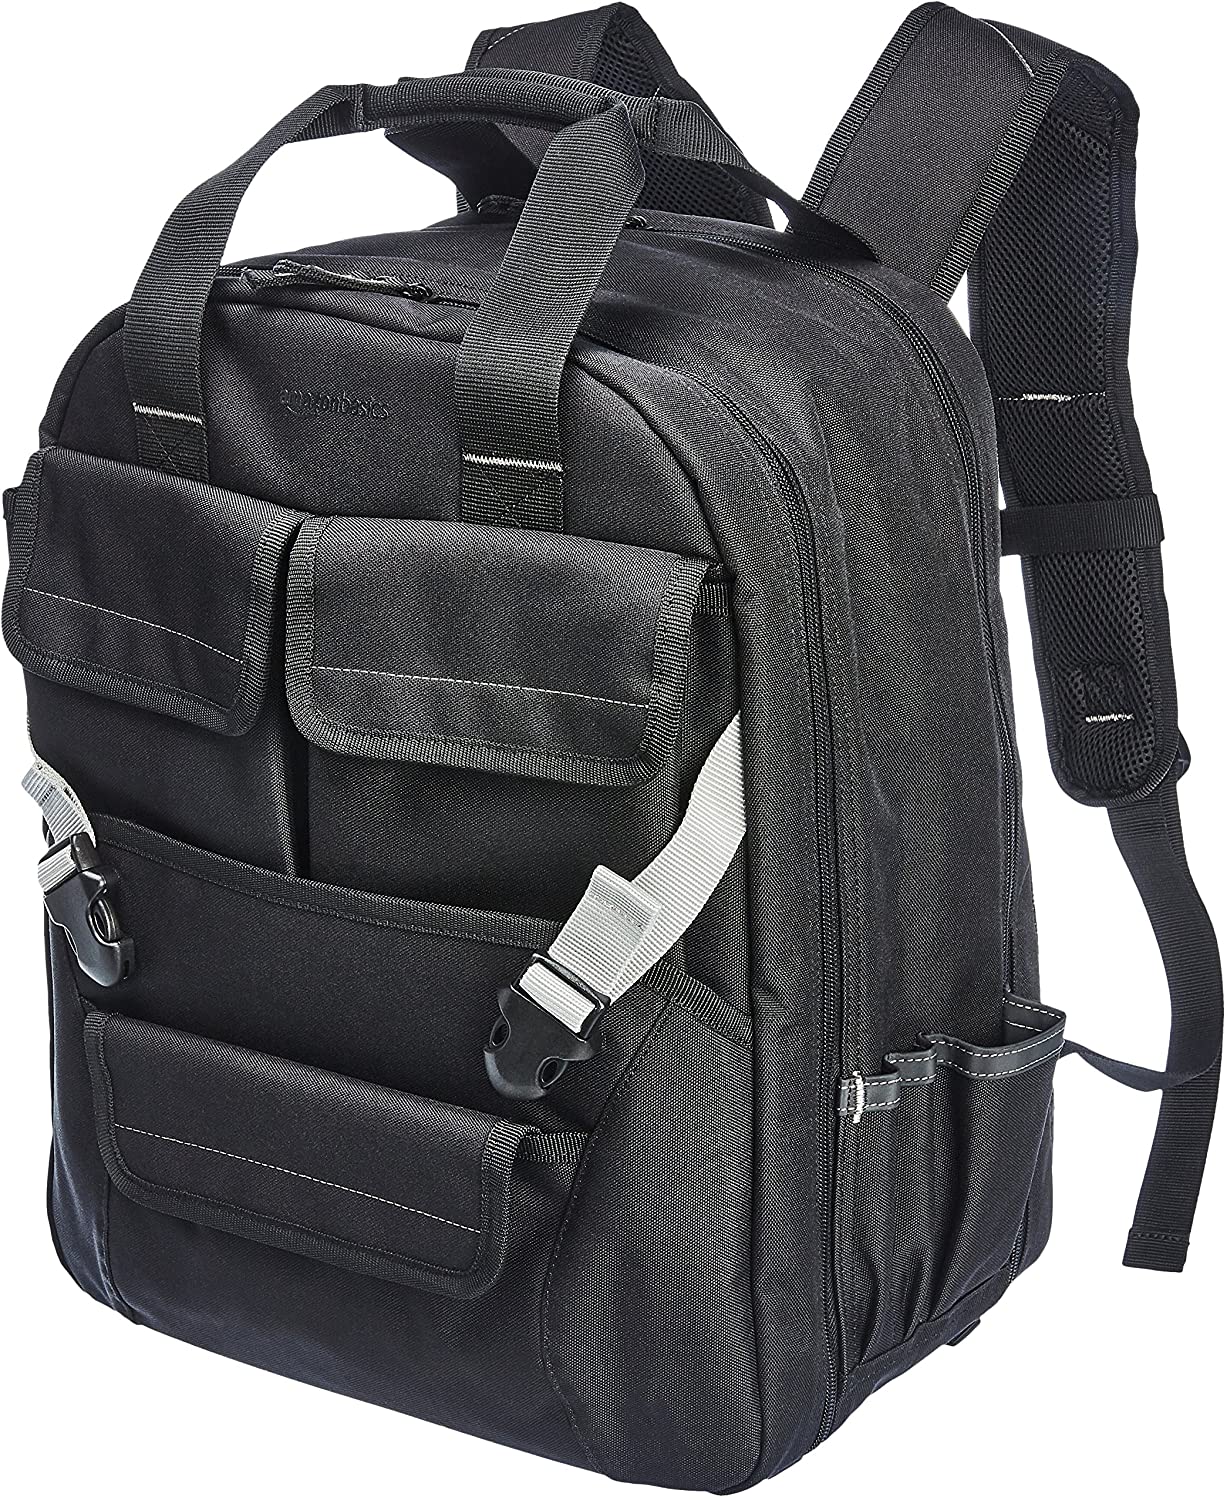 Amazon Basics Durable Tool Bag Backpack